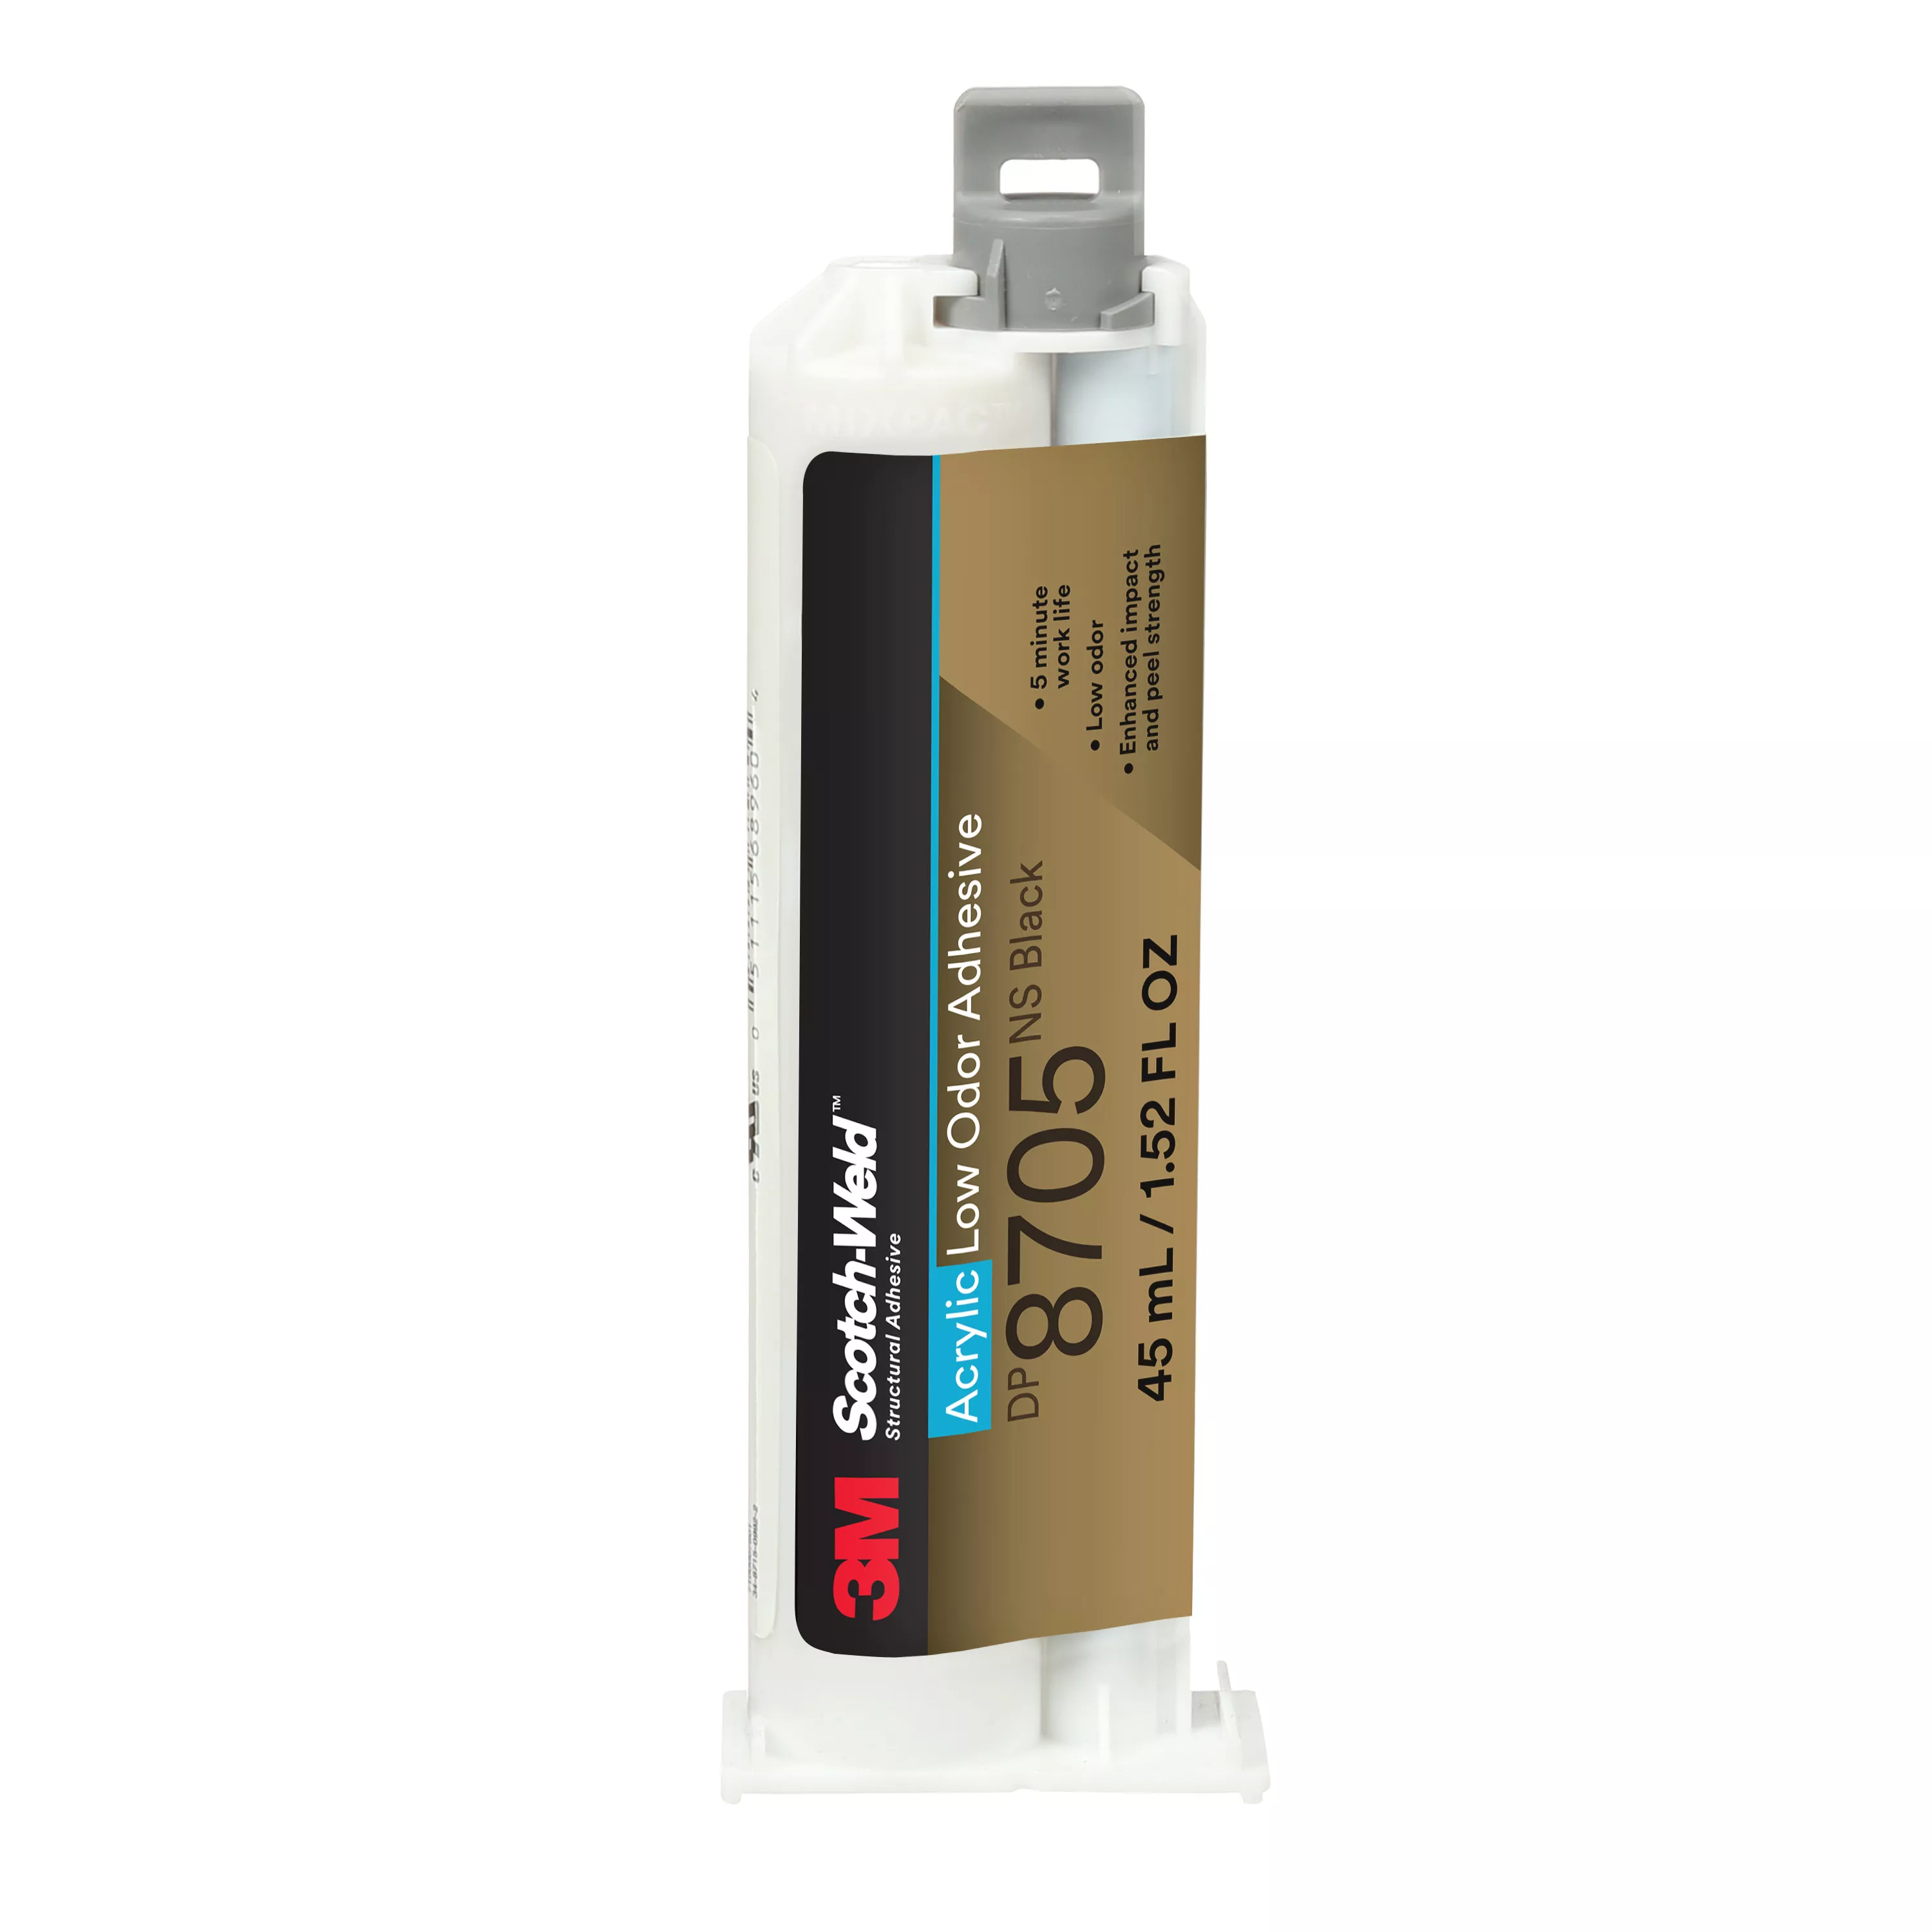 SKU 7100245036 | 3M™ Scotch-Weld™ Low Odor Acrylic Adhesive DP8705NS